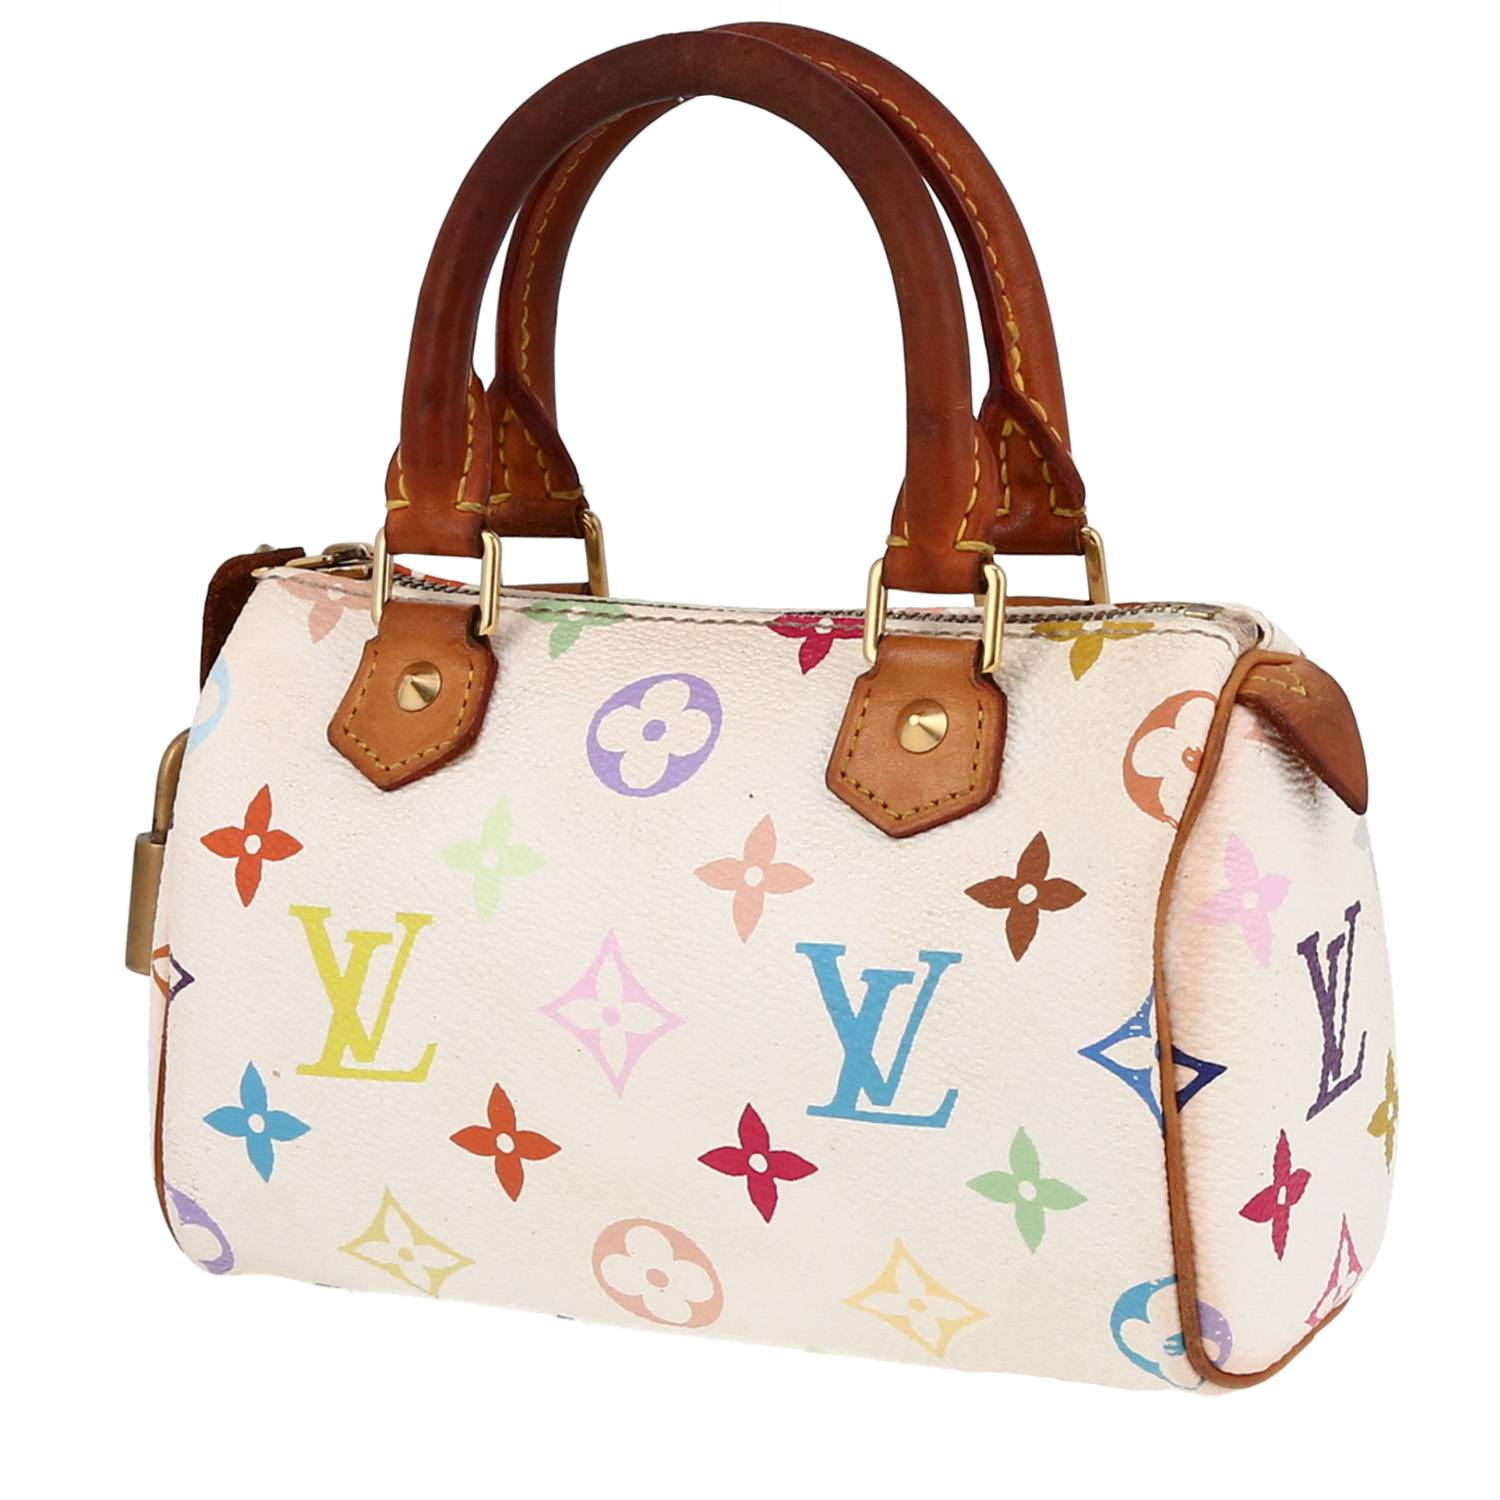 Louis Vuitton Nano Speedy Handbag in Multicolor and White Monogram